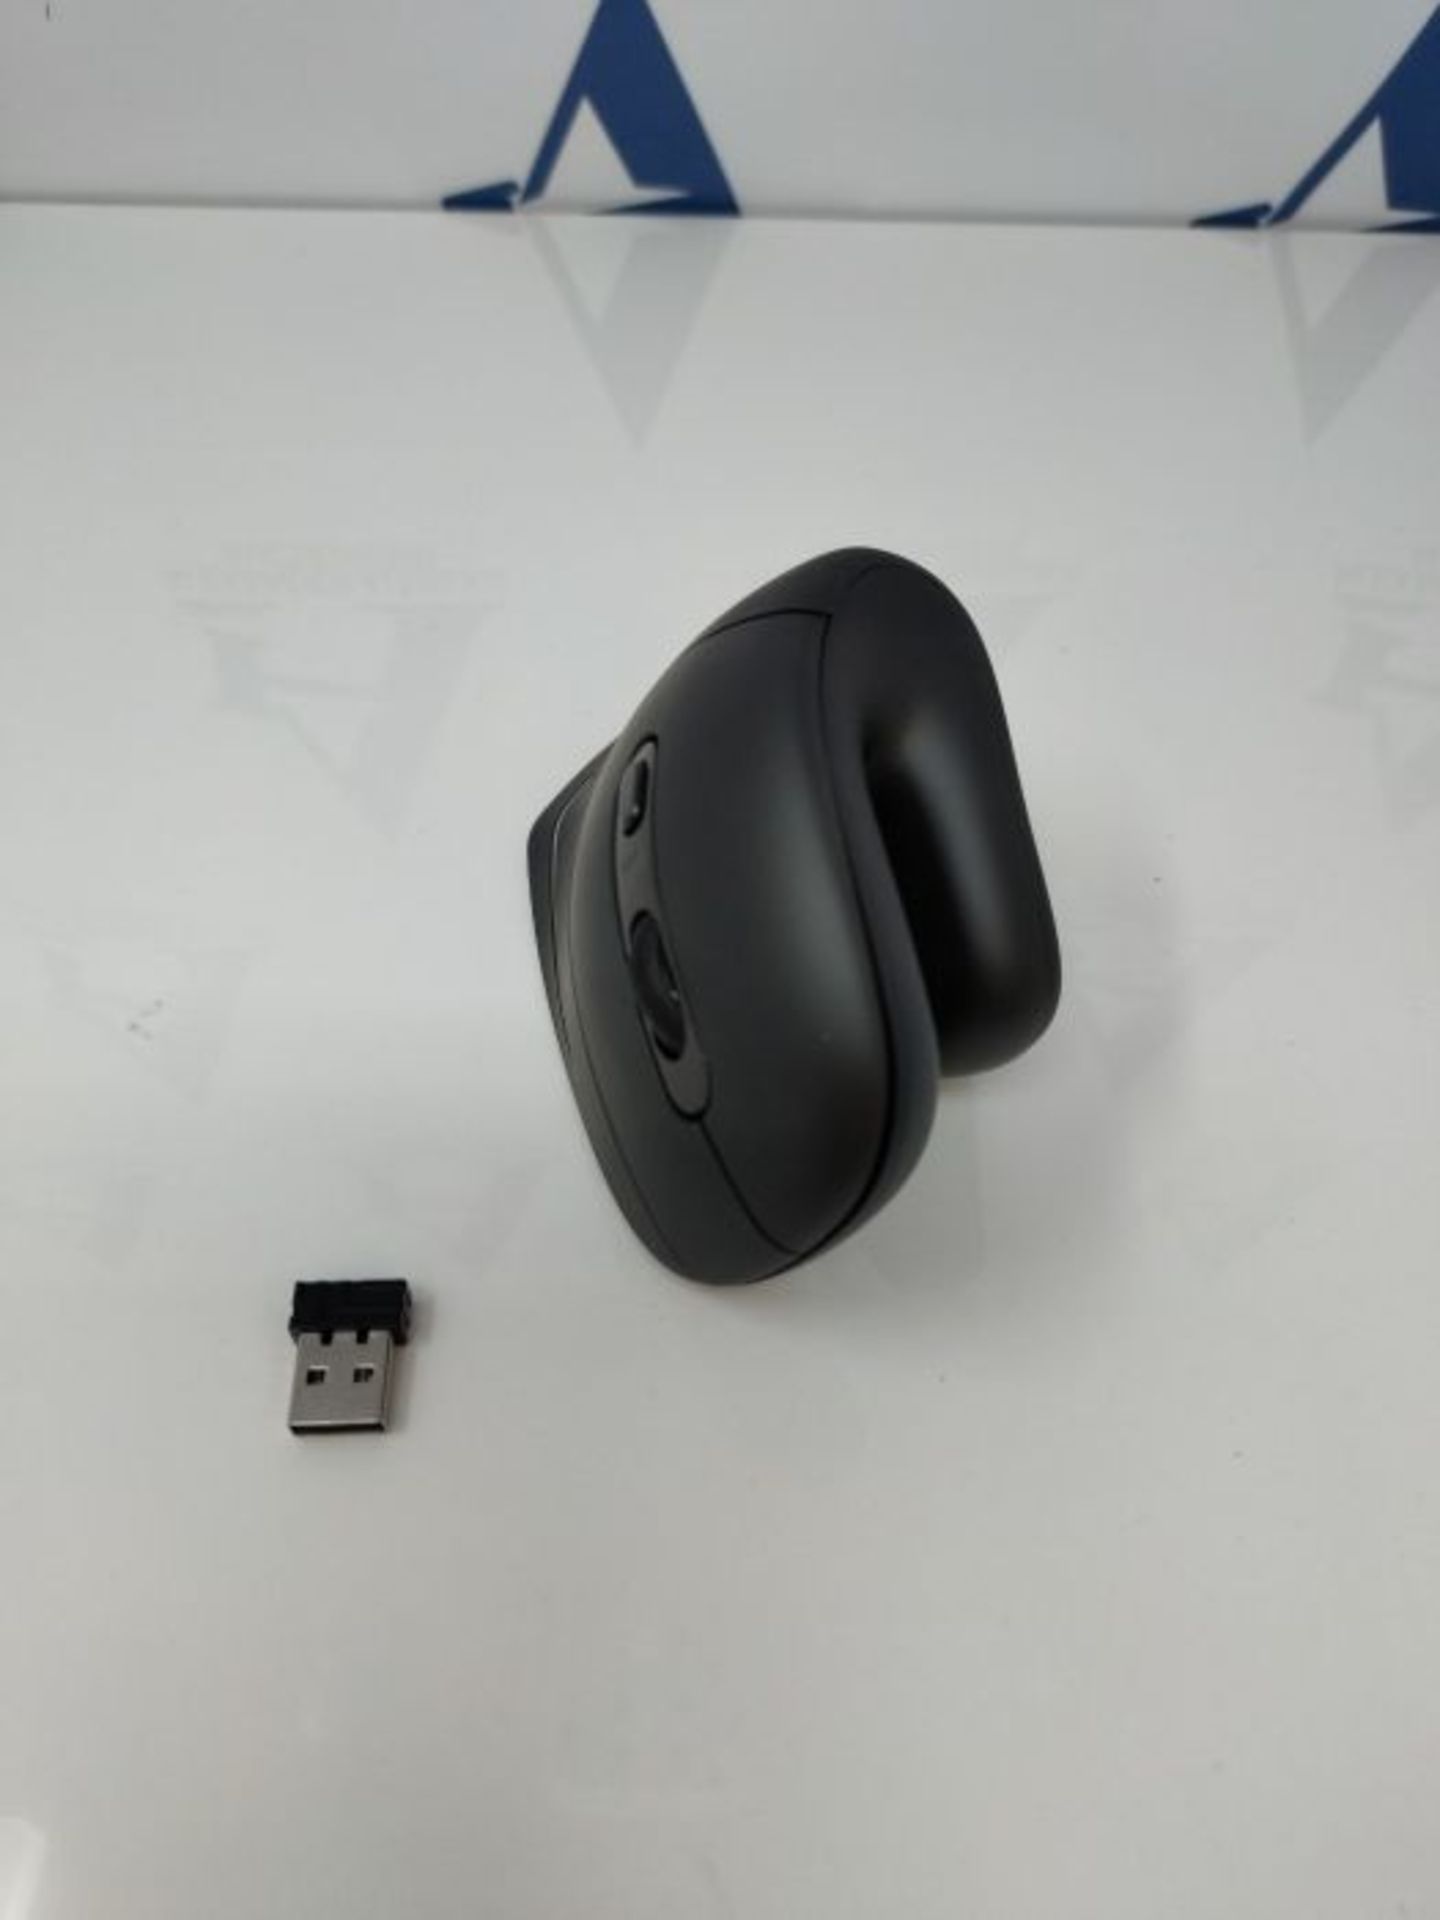 CSL - kabellose Vertikal Maus - Bluetooth + 2,4 Ghz Funkmaus - Wireless Vertical Mouse - Image 3 of 3